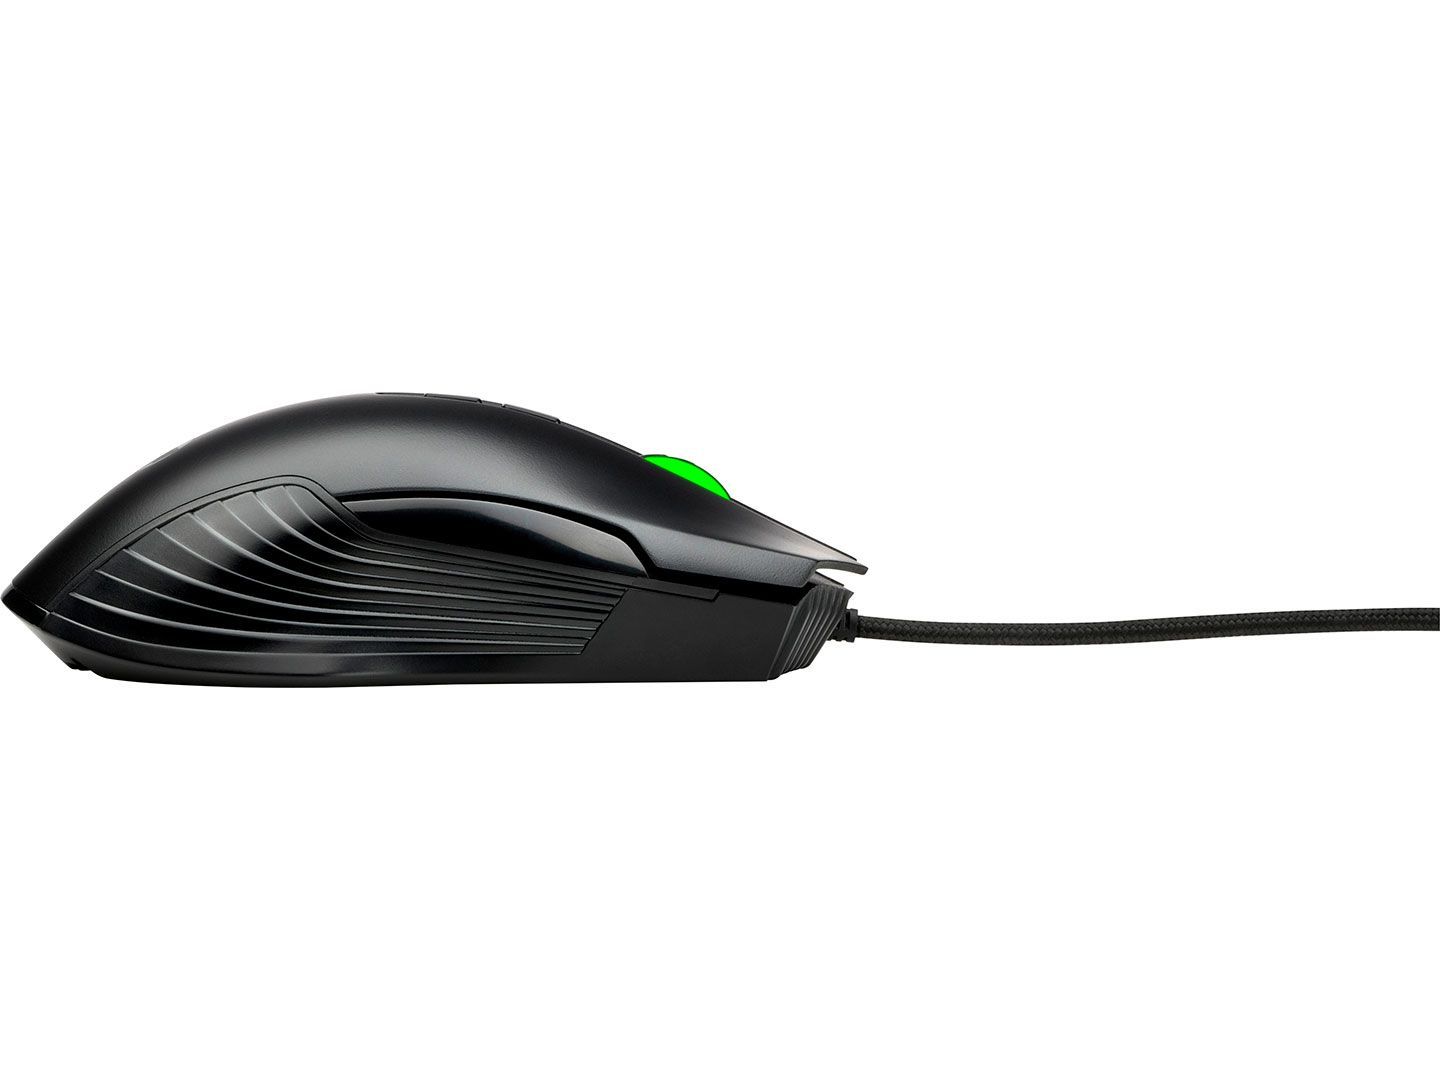 HP X220 Backlit Gaming Mouse 3600-DPI Rato USB Type-A Preto com LEDs  (8DX48AA-ABB, HSA-A009M, L78176-A21, L78178-001) N 